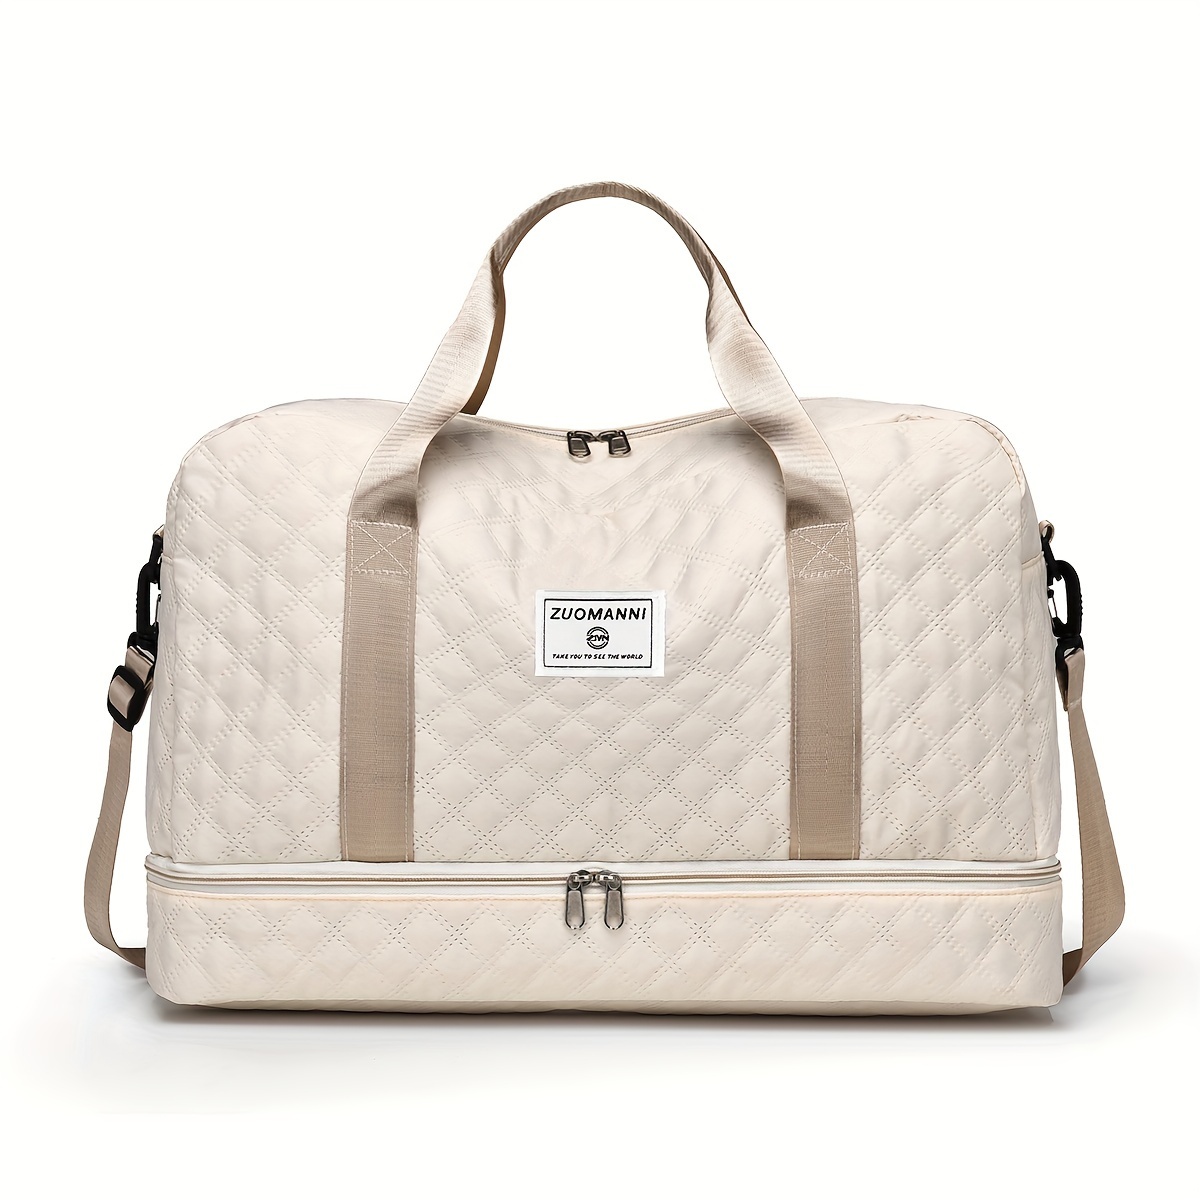 lightweight argyle pattern luggage bag large capacity travel duffle bag portable overnight bag details 23